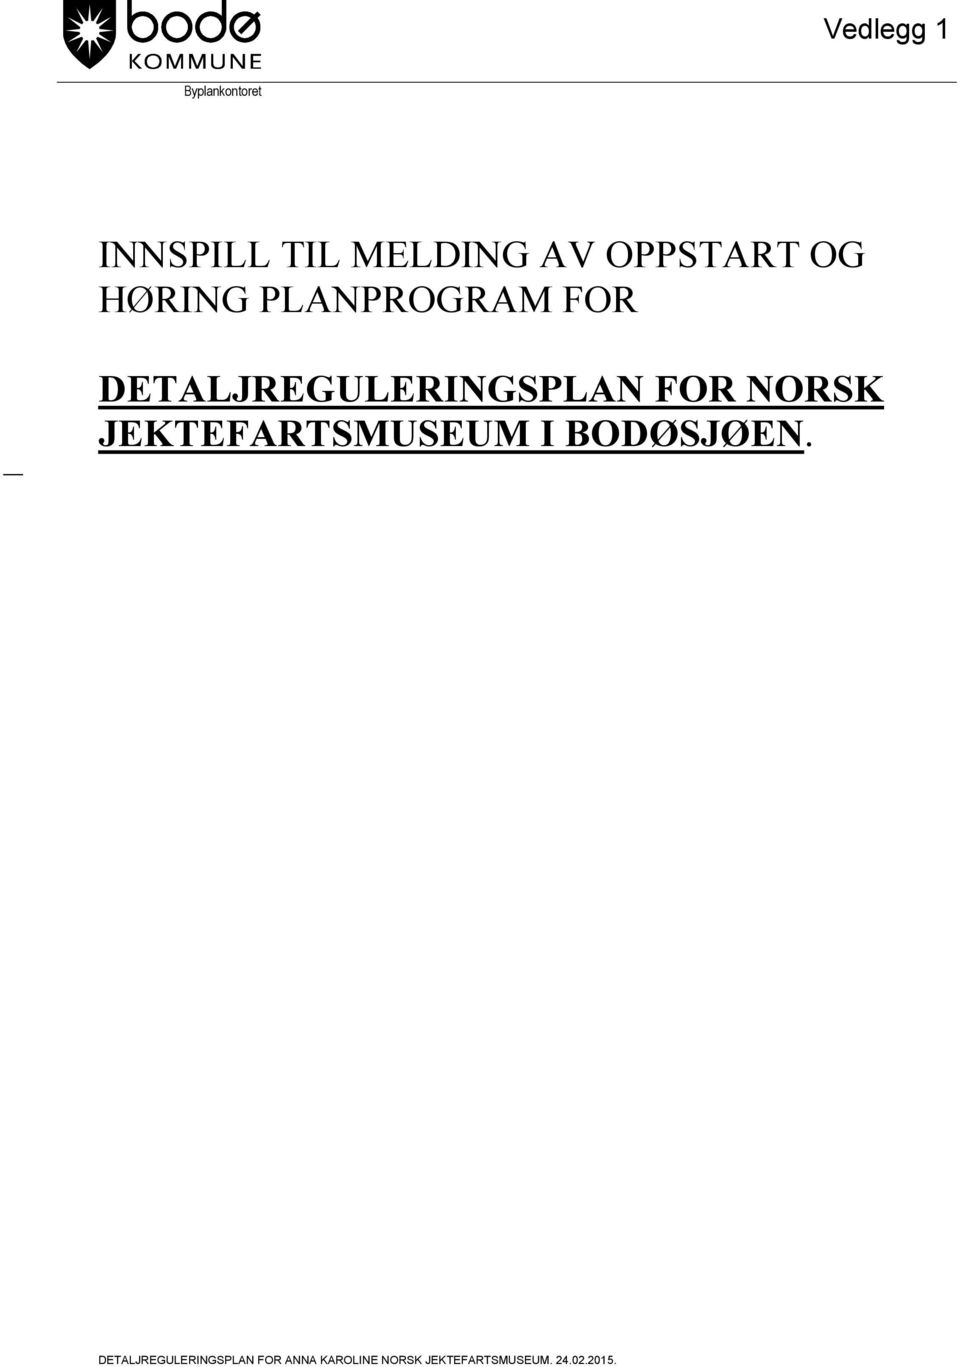 DETALJREGULERINGSPLAN FOR NORSK JEKTEFARTSMUSEUM I